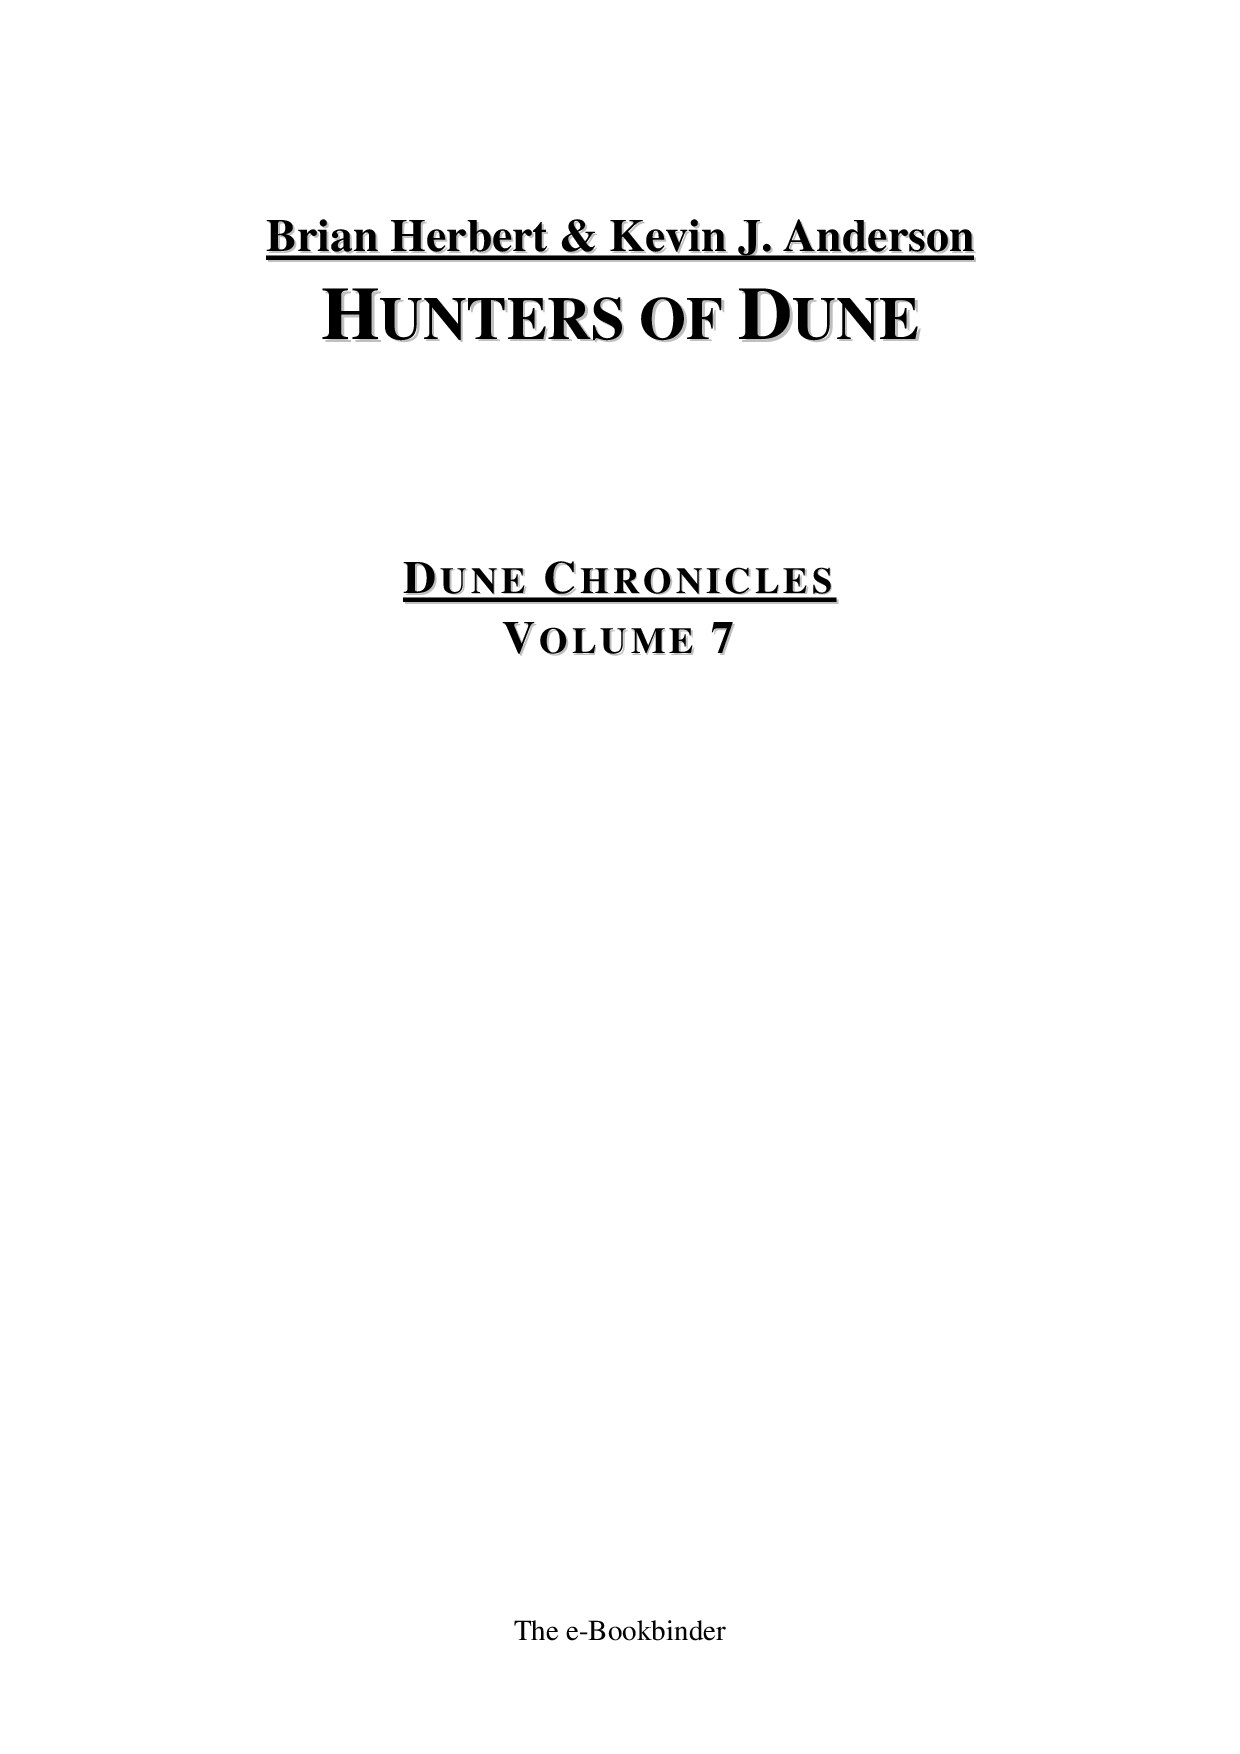 Brian Herbert & Kevin J. Anderson - Dune Chronicles 07 - Hunters of Dune